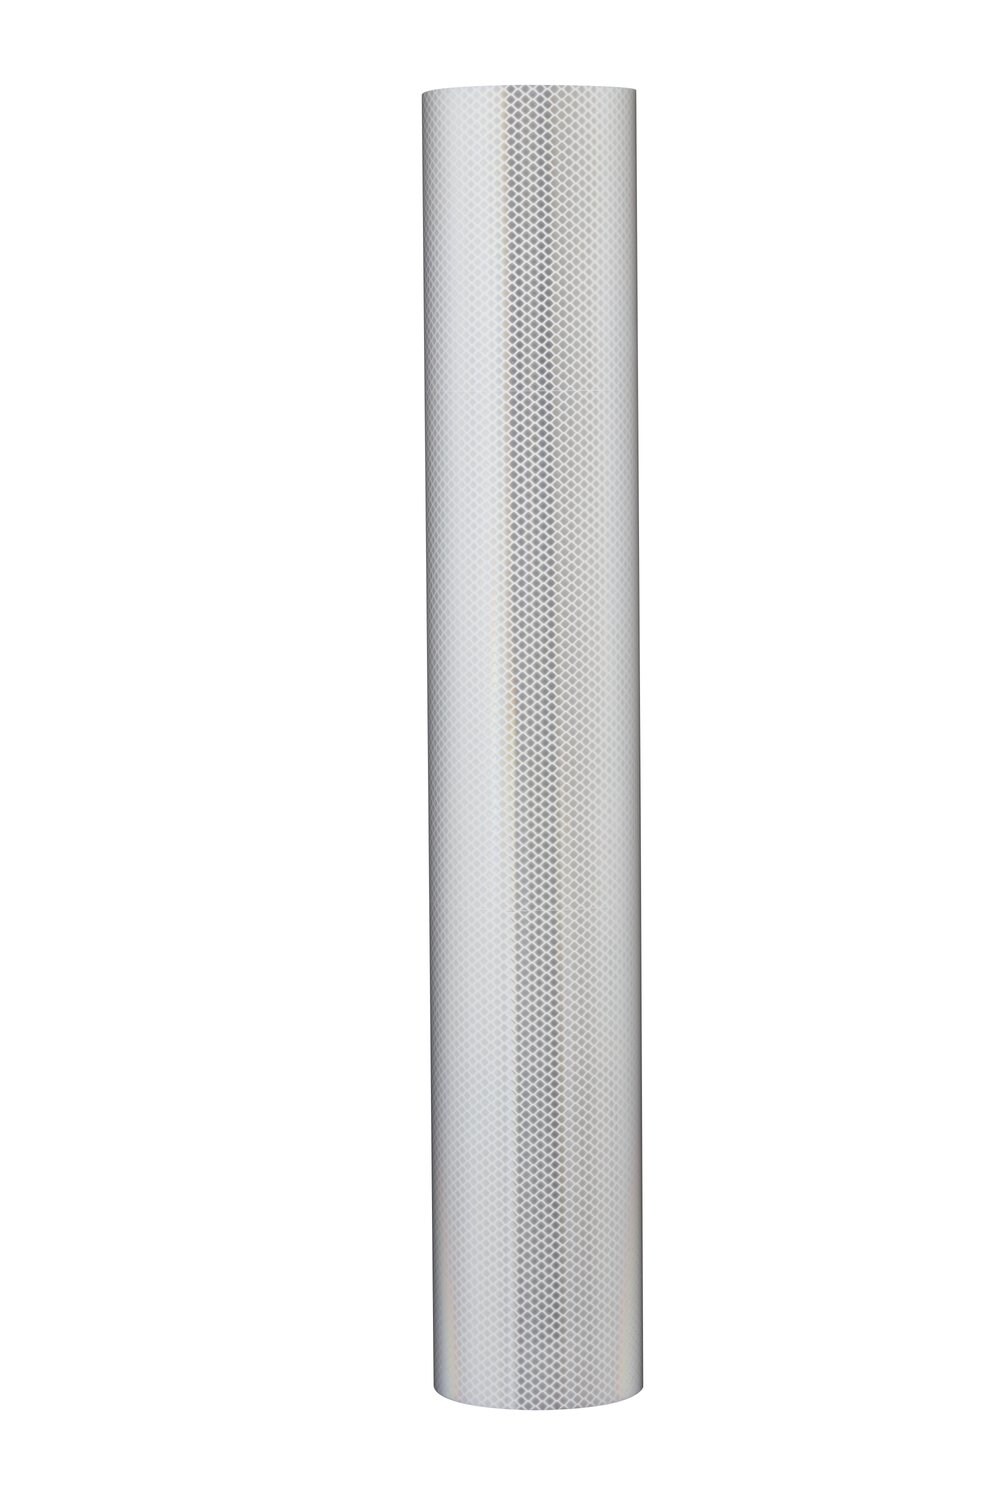 7100009916 - 3M Diamond Grade Flexible Prismatic Reflective Sheeting 3910FP White,
Configurable roll